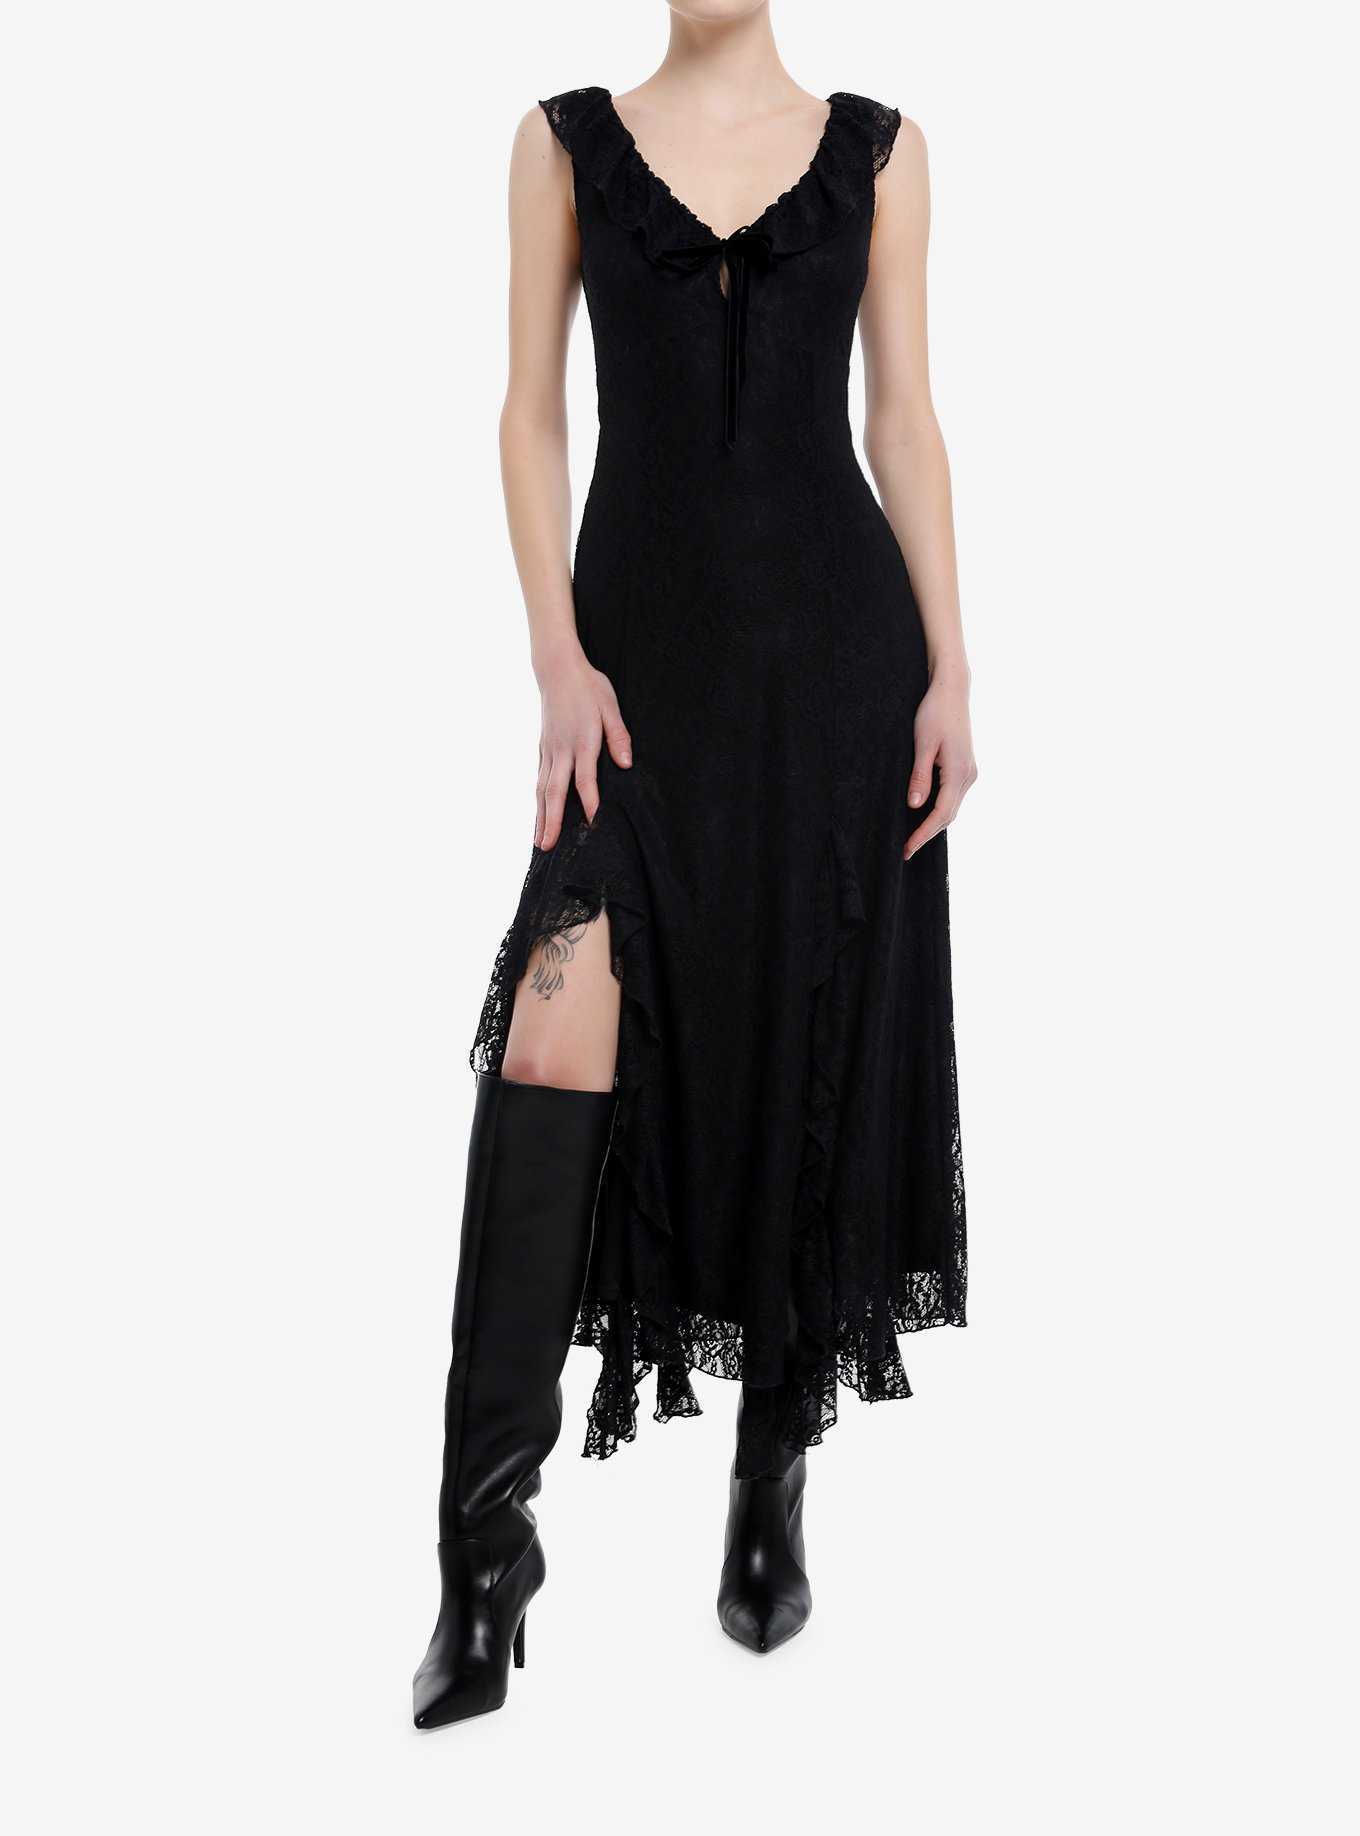 Cosmic Aura Black Lace Cami Twofer Dress